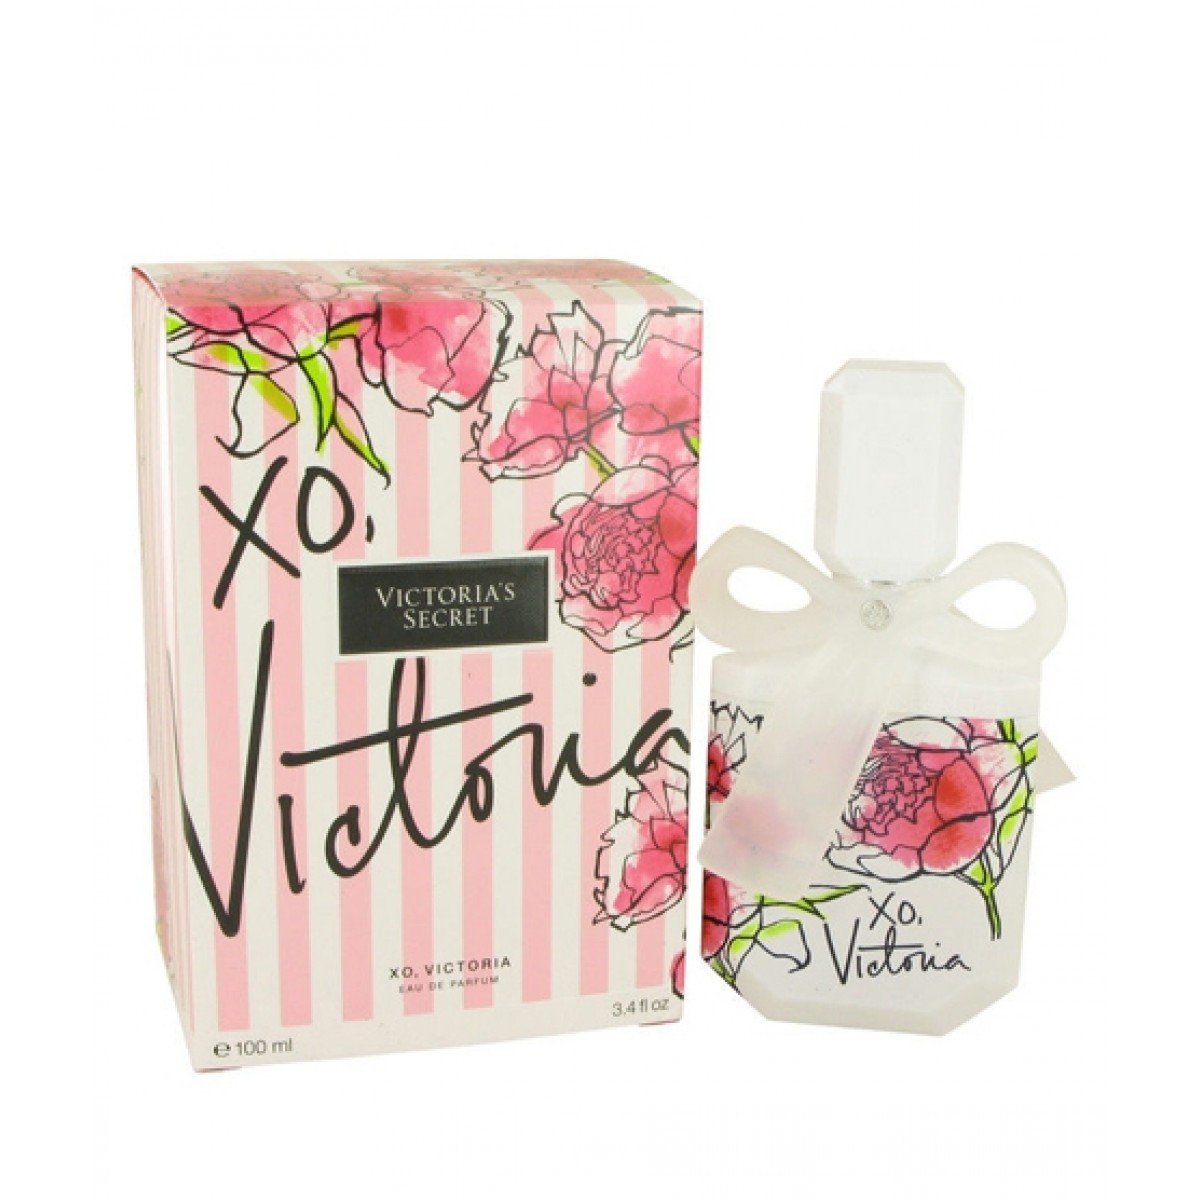 Victoria's Secret Xo Victoria Women Edp 100ml - Beauty Box